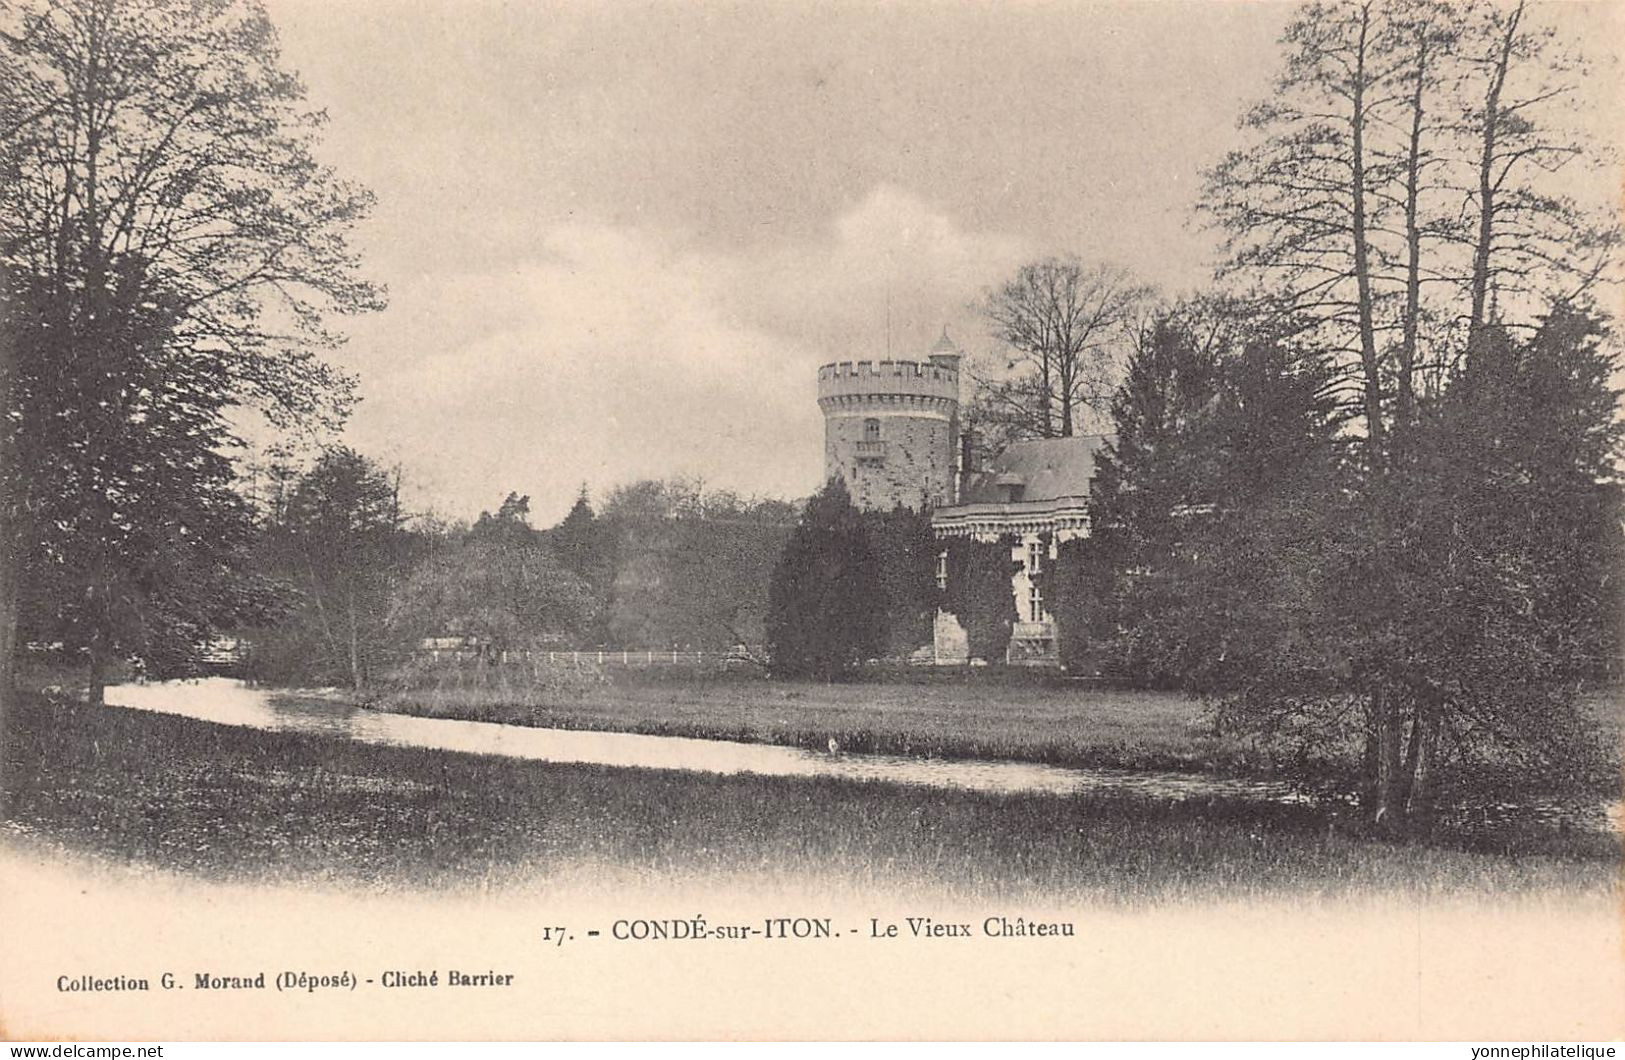 27 - EURE - Canton de BRETEUIL - CONDE SUR ITON - collection de 25 CPA Château - LOT 27-17G